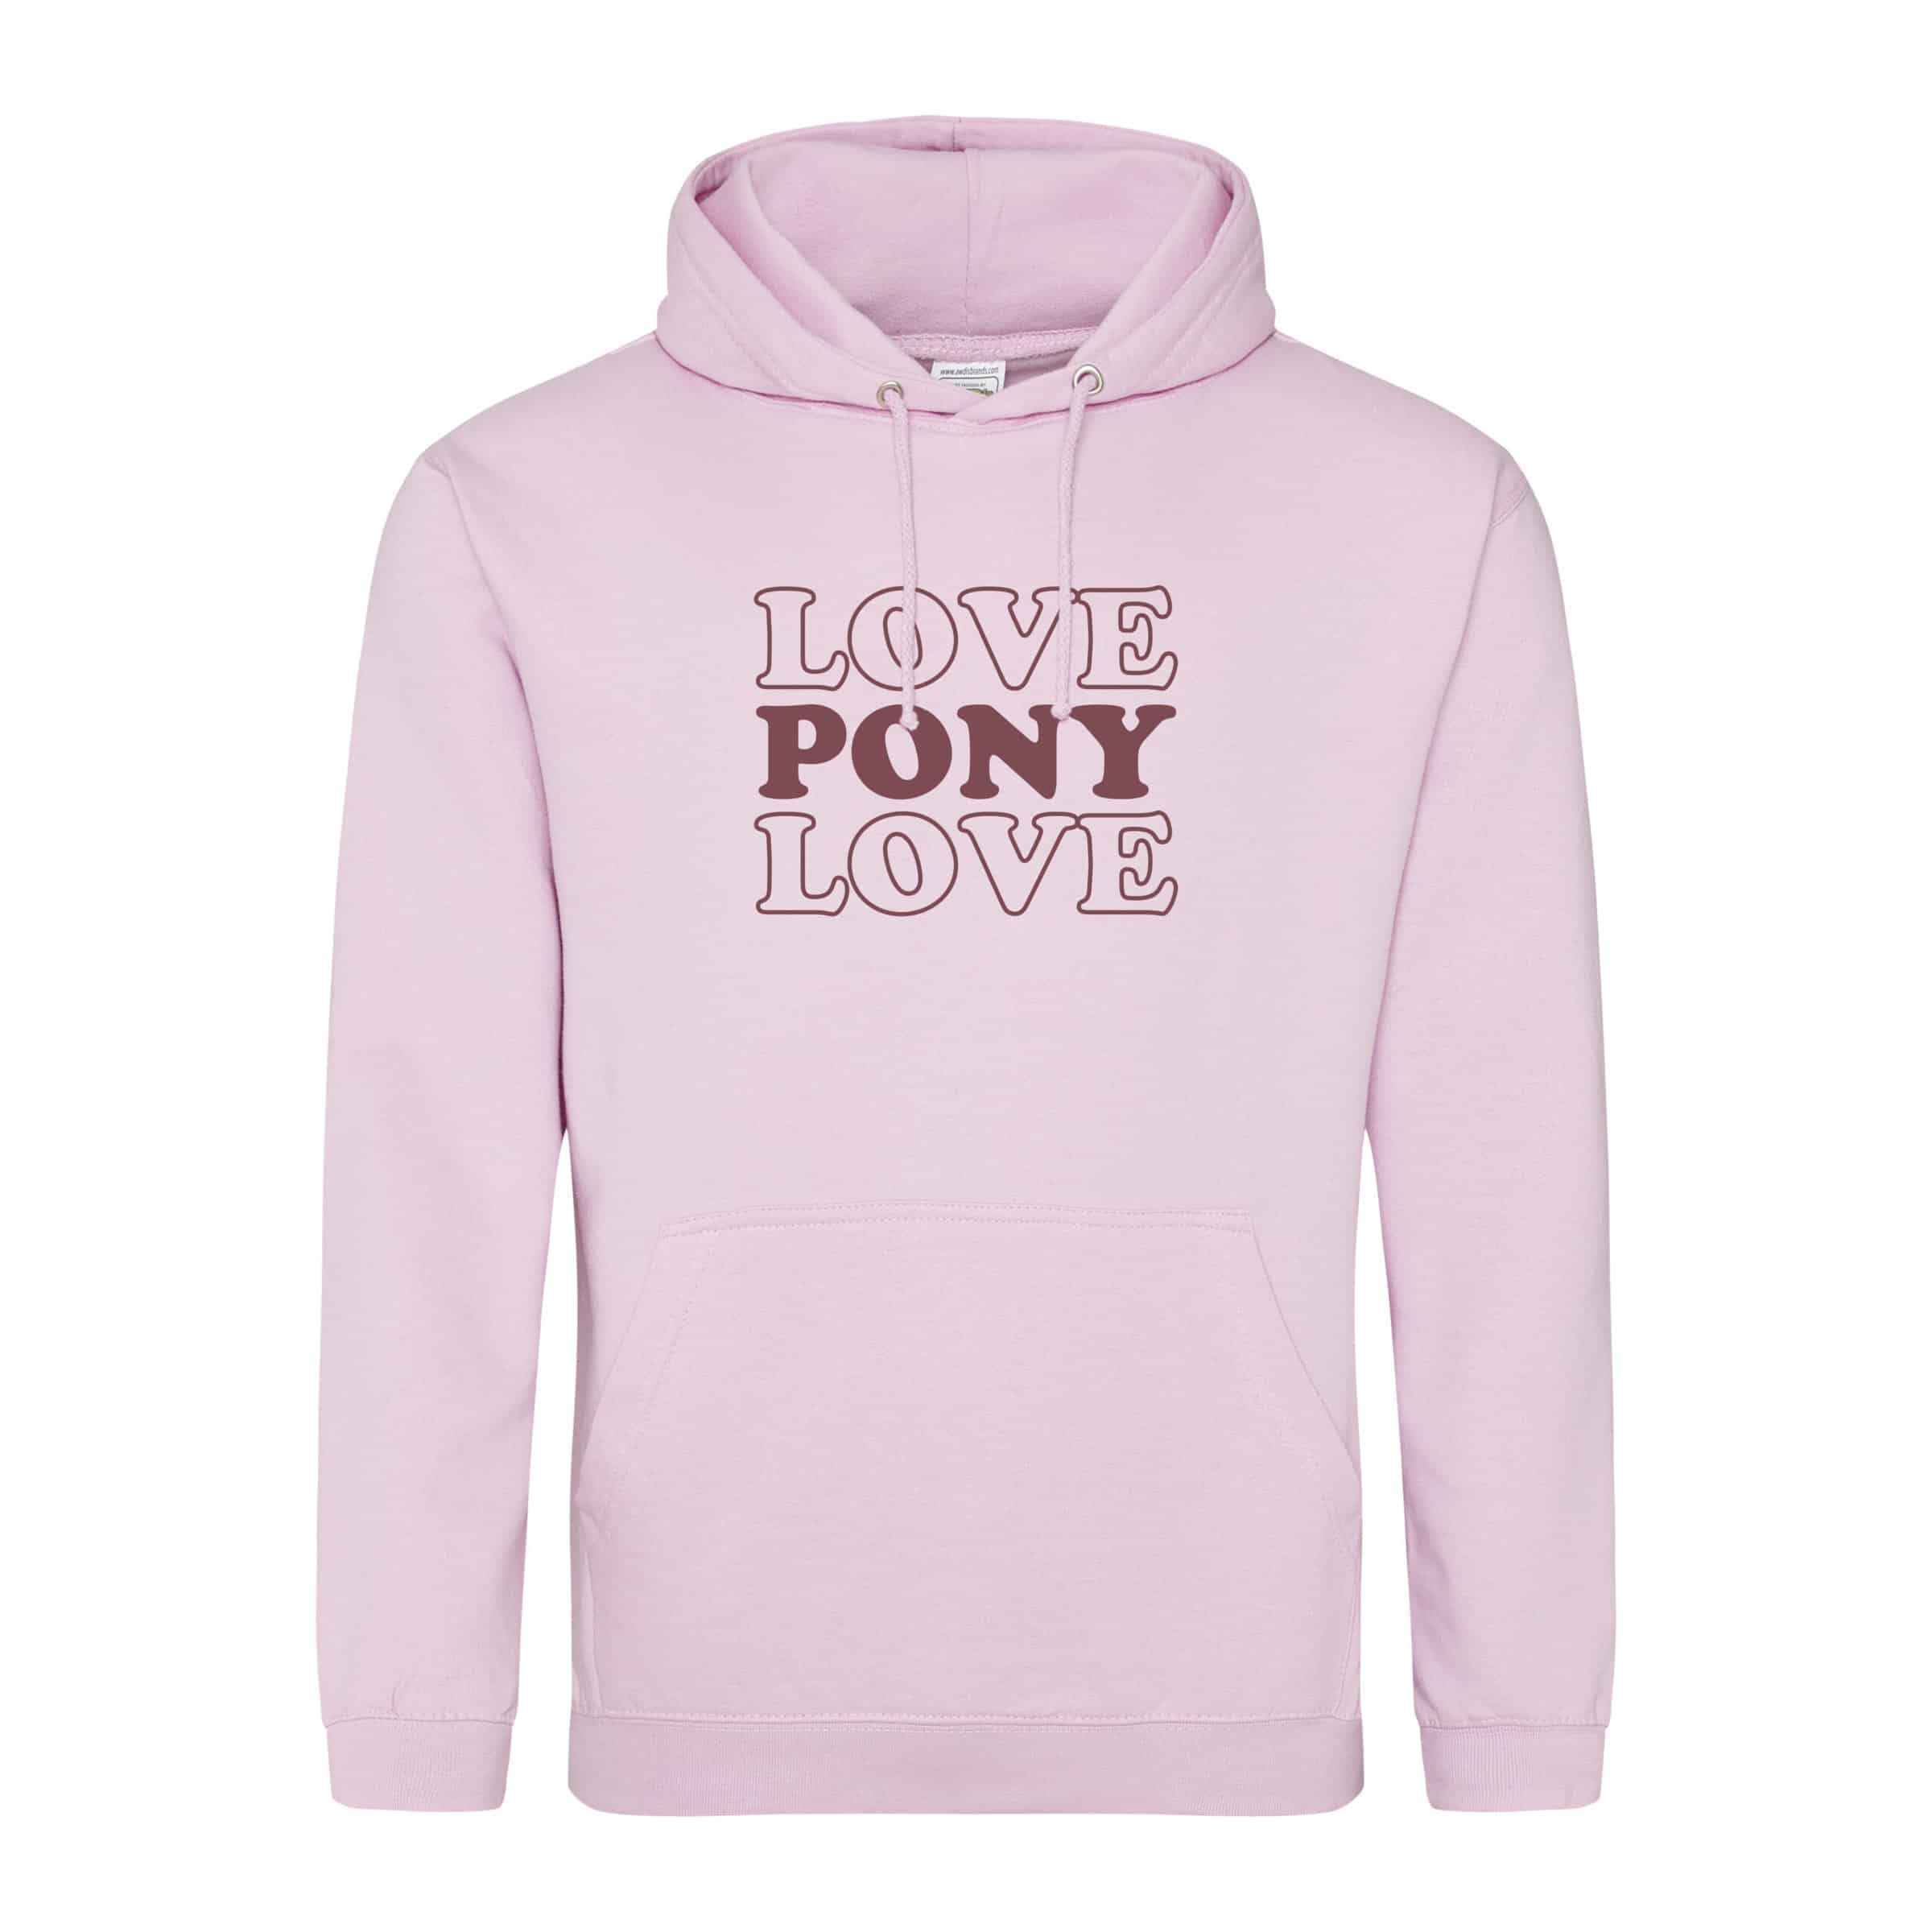 Love Pony Love hoodie, Pony Hoodies